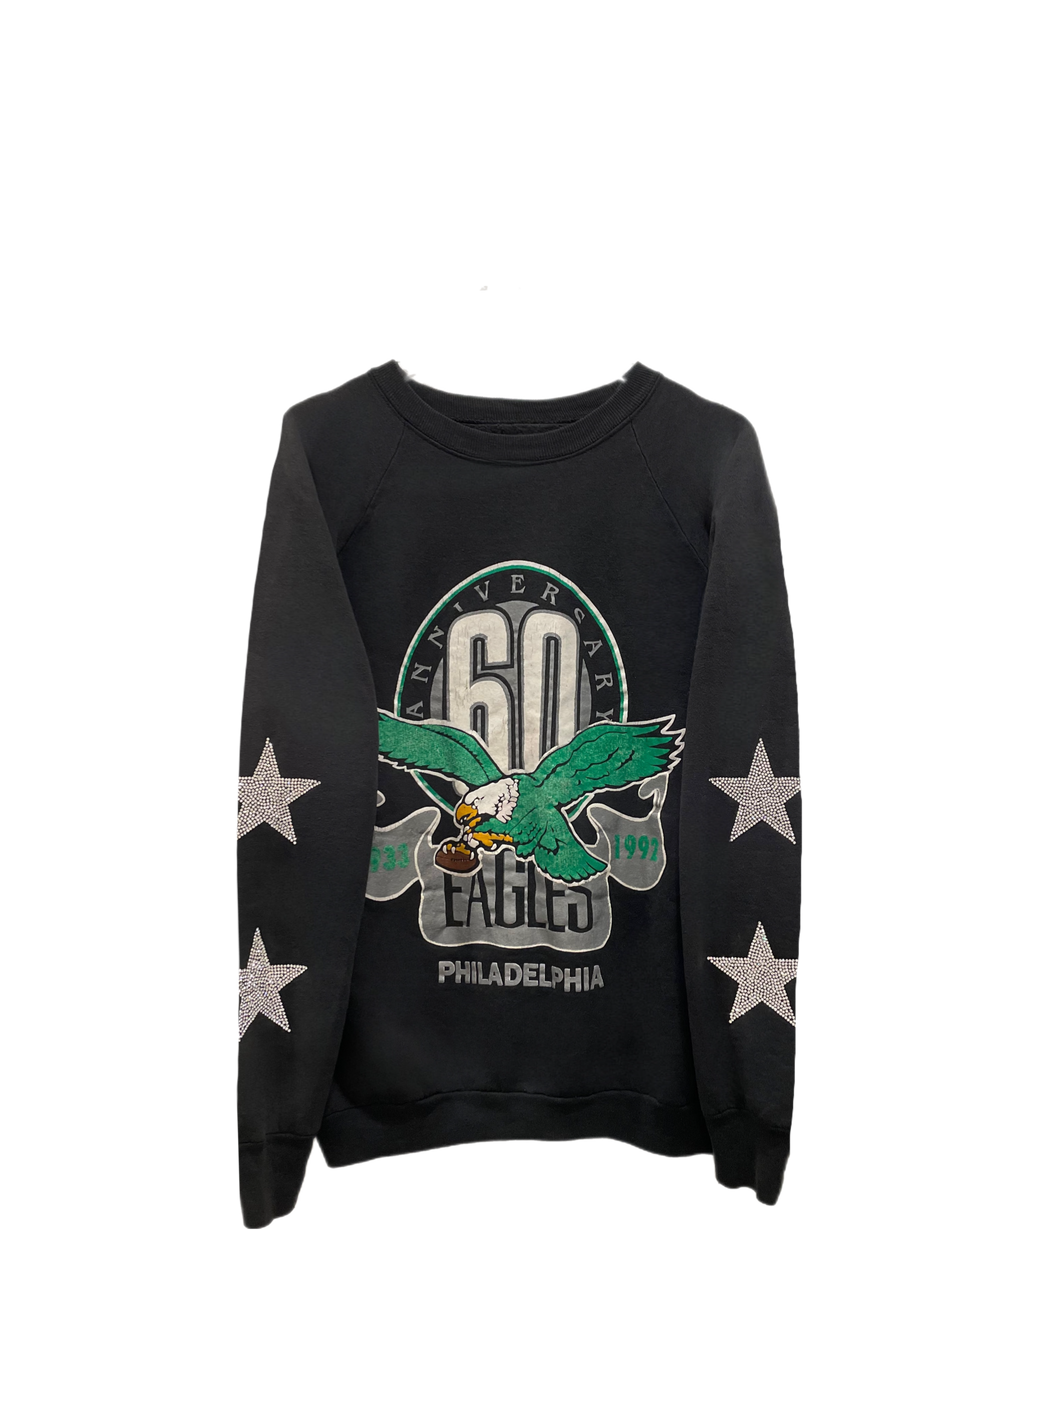 Philadelphia Eagles, NFL One of a KIND Vintage Sweatshirt with Crystal Star Design.